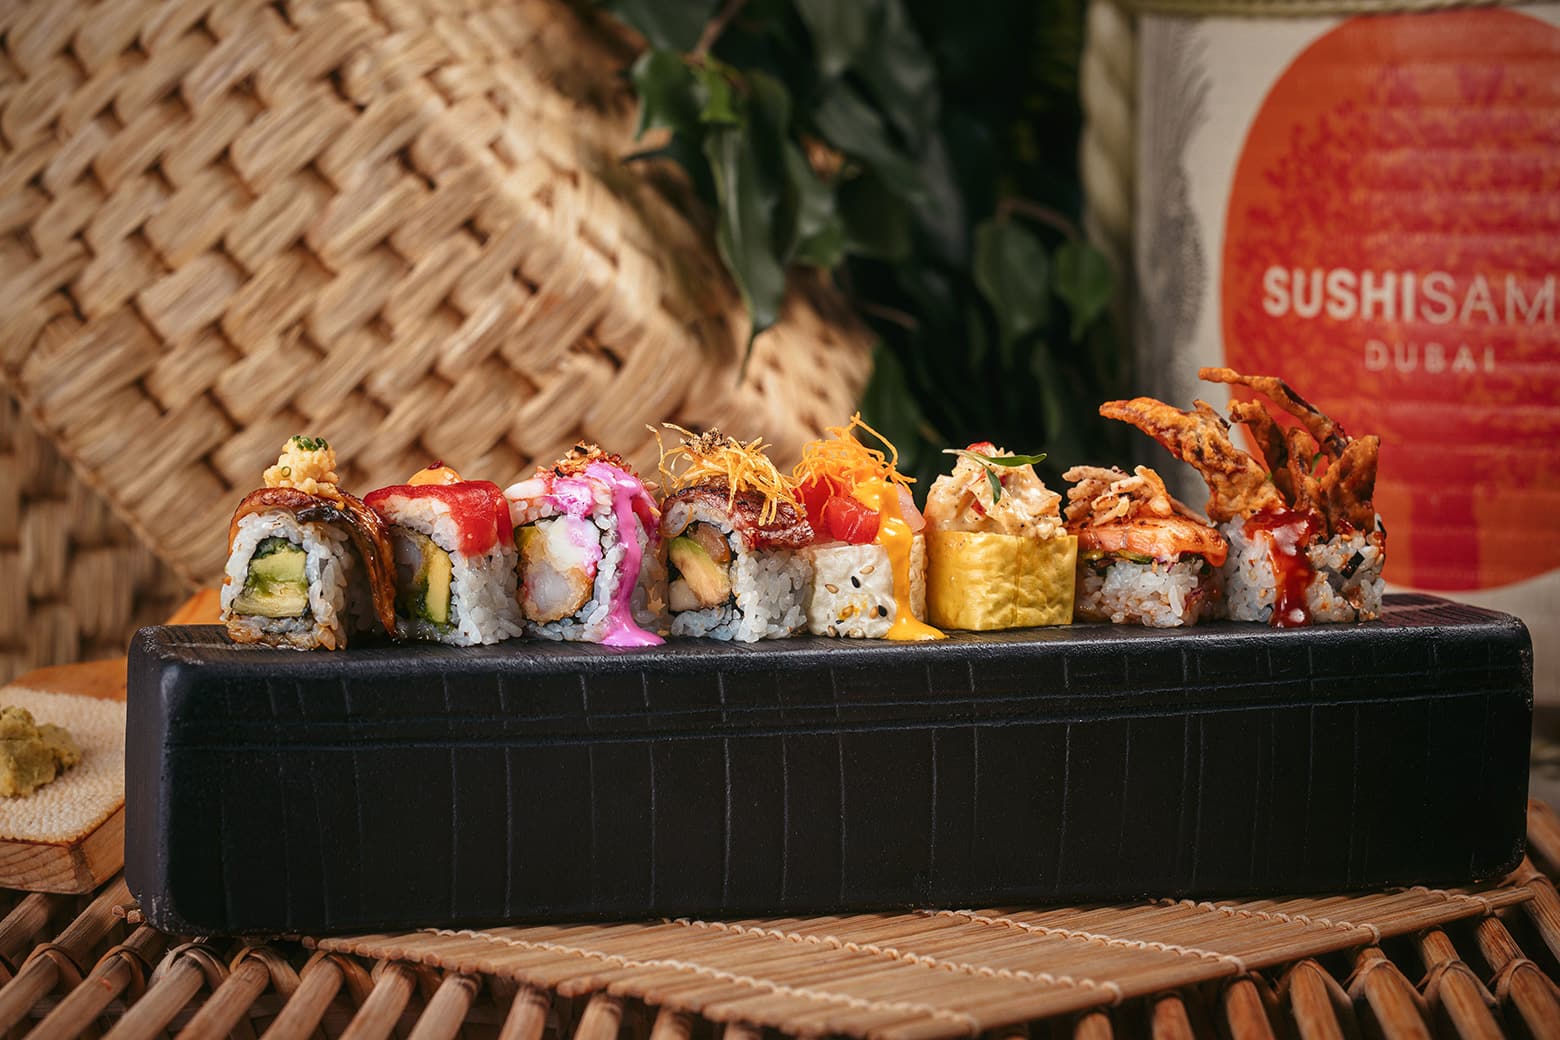 Sushi restauracia, vyborne jedlo , skvela obsluha, excelent, - Picture of Zuma  Dubai - Tripadvisor